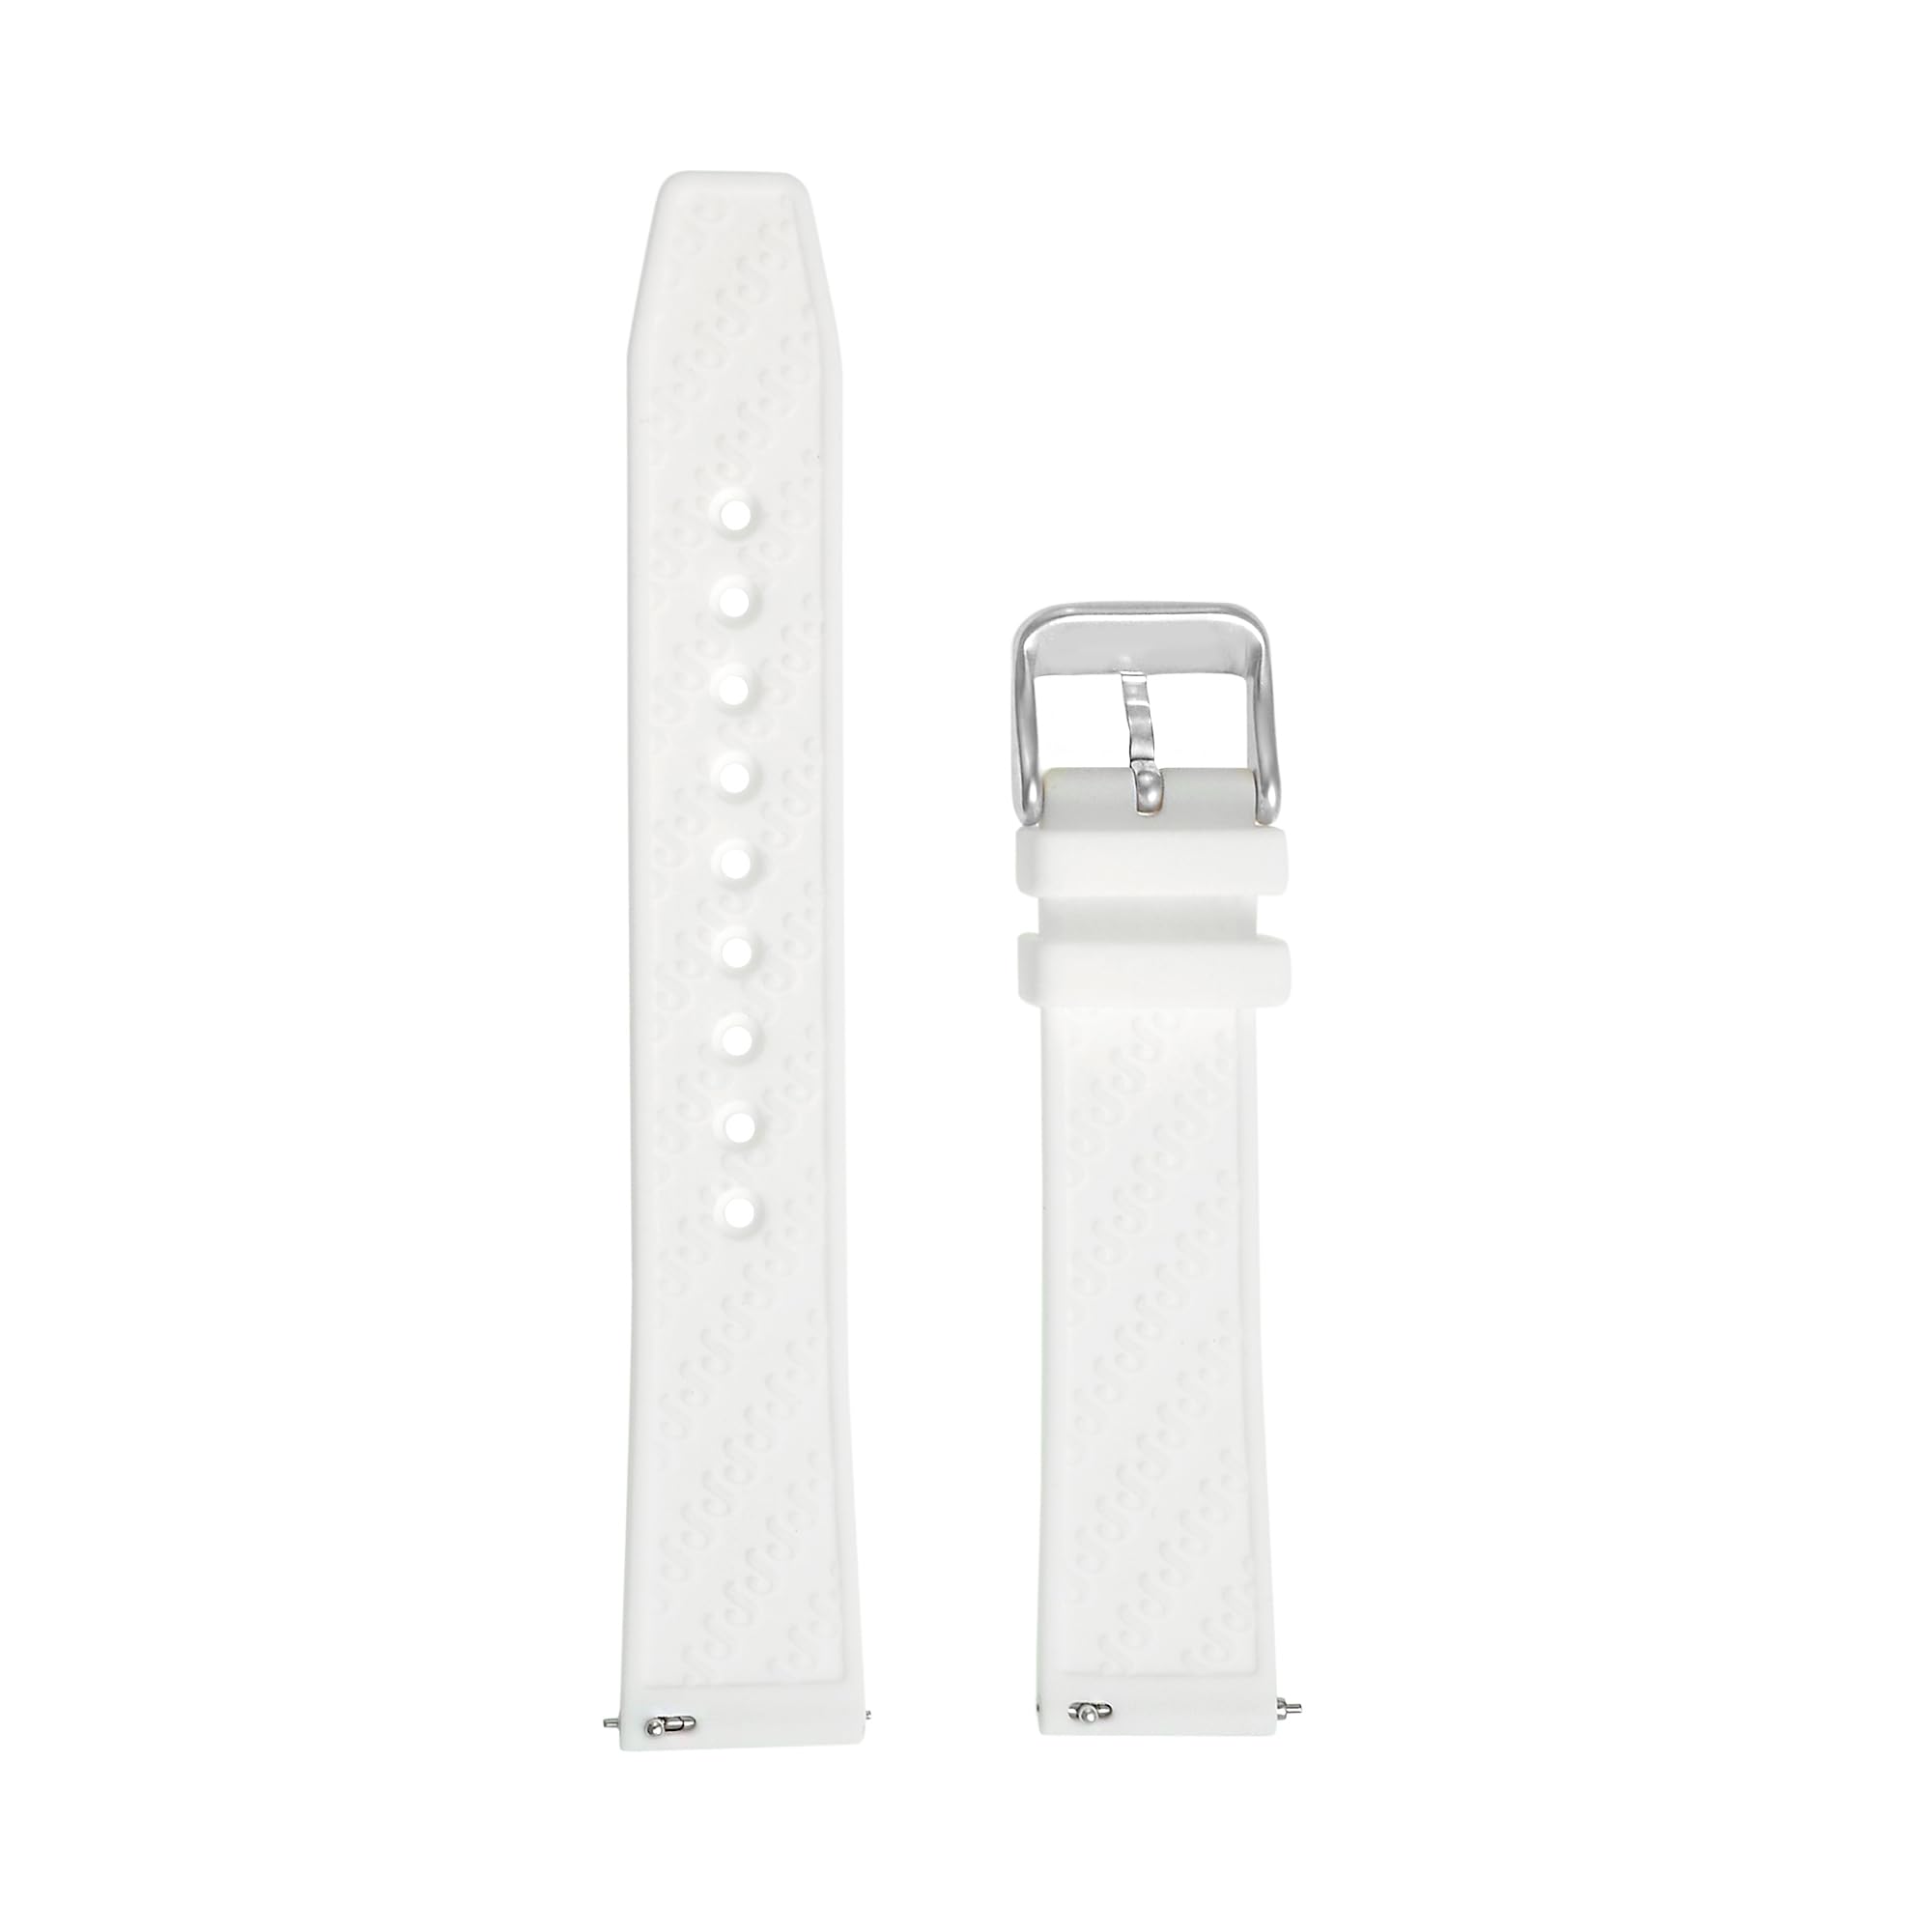 Steinhausen Arbon Premium Silicone Watch Bands - Quick Release - Soft Rubber - Waterproof - Interchangable Replacement Bands - Premium Assorted Colors